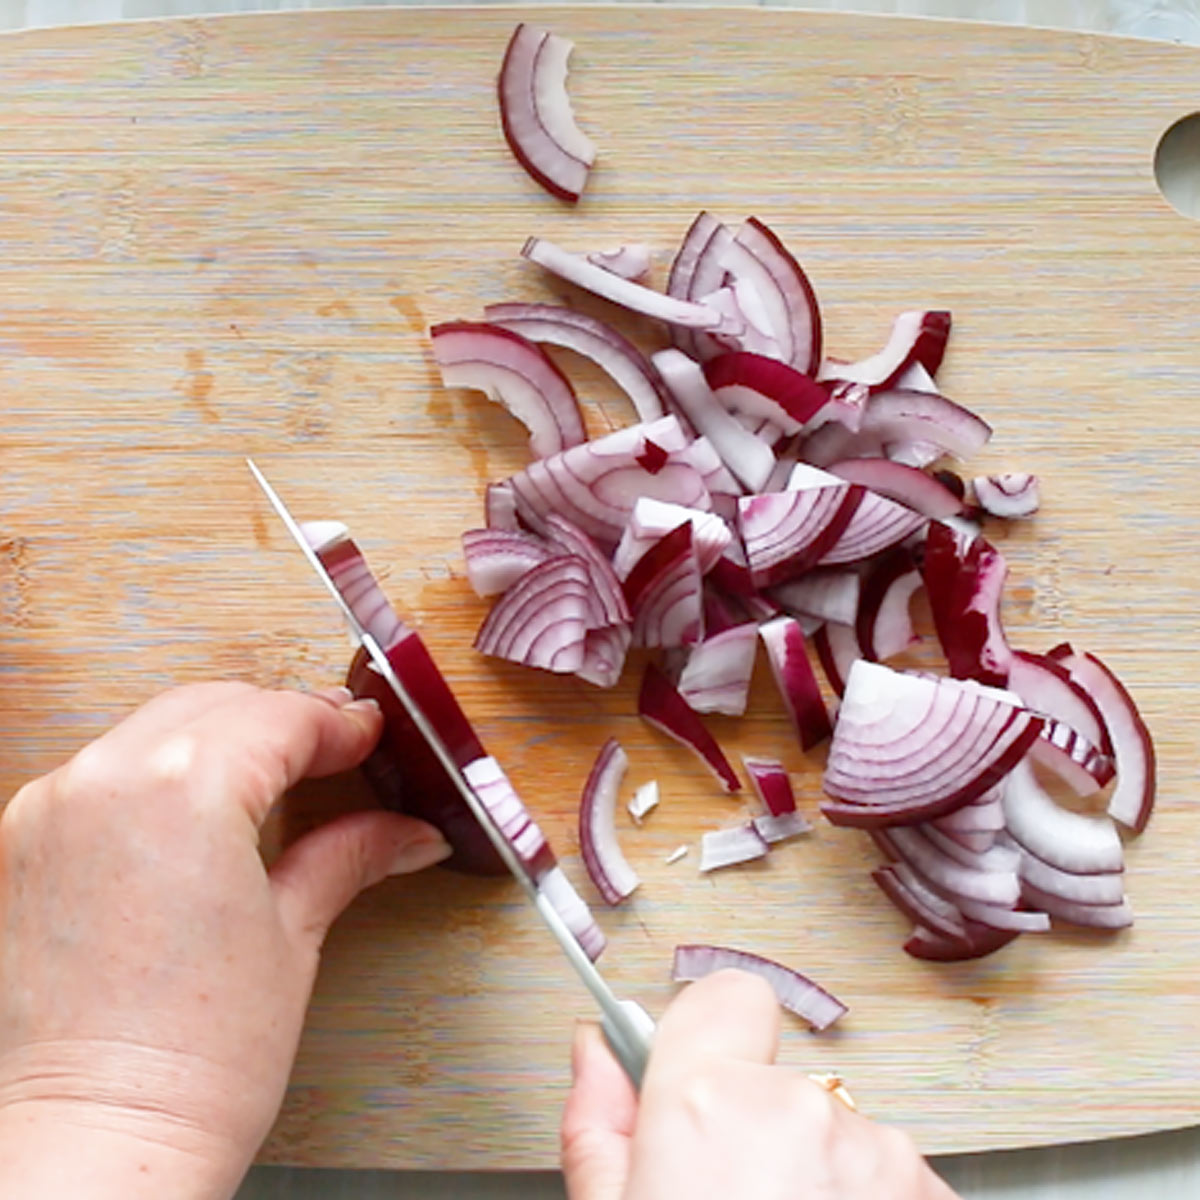 slice red onion